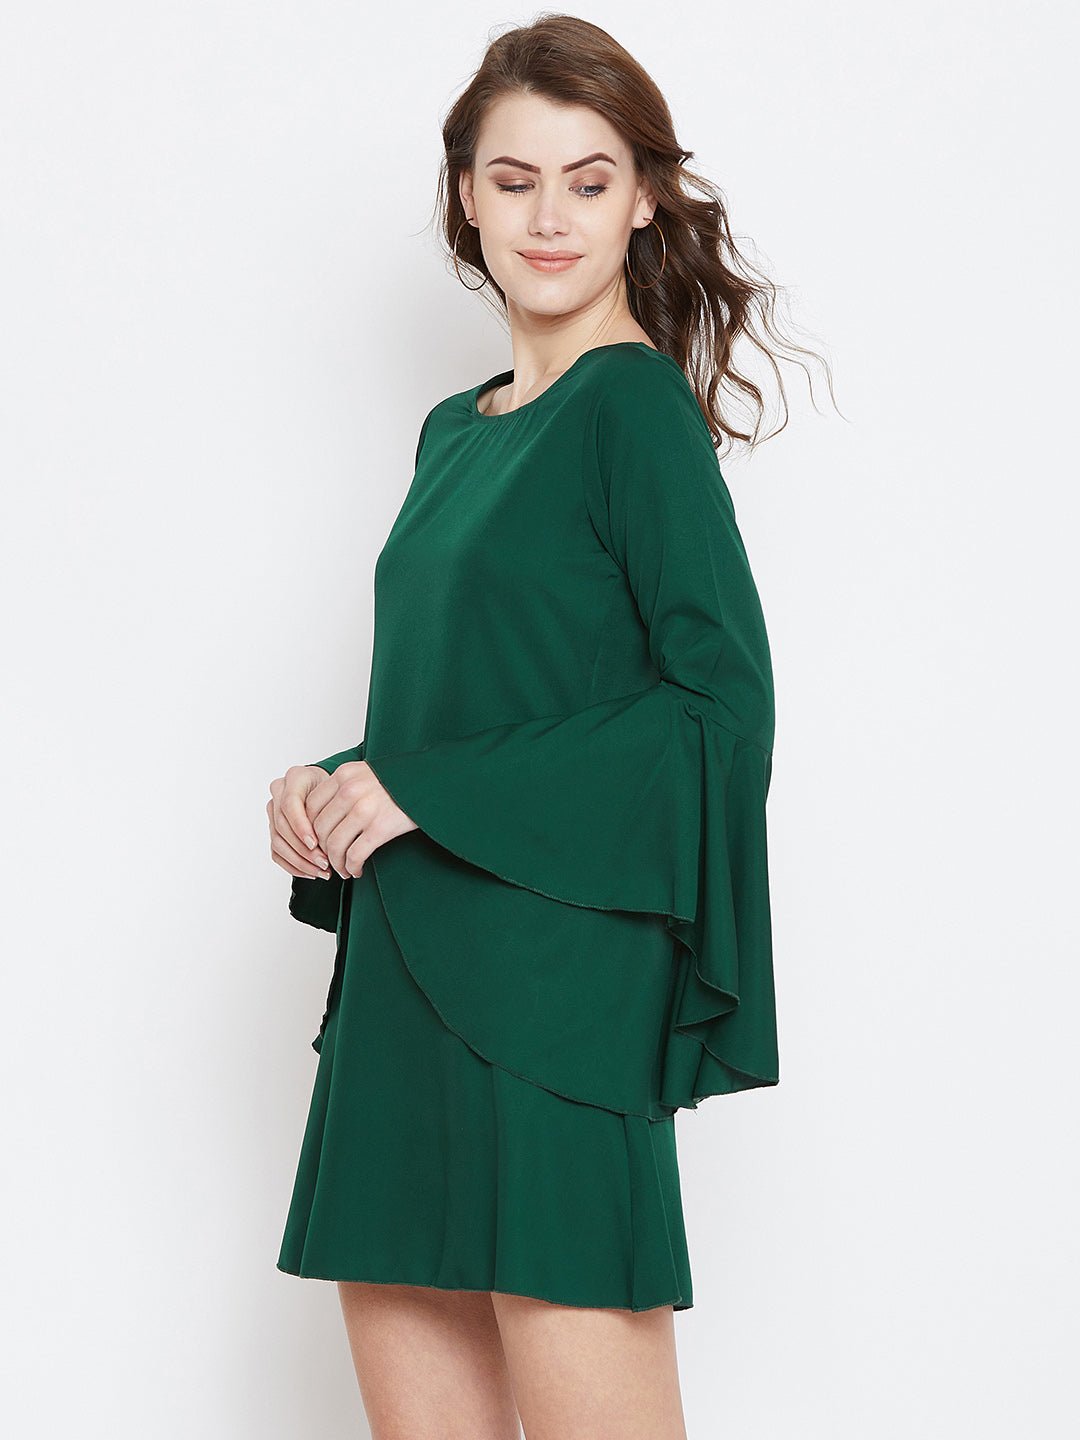 Folk Republic Women Solid Green Round Neck Bell Sleeves A-Line Mini Dress - #folk republic#